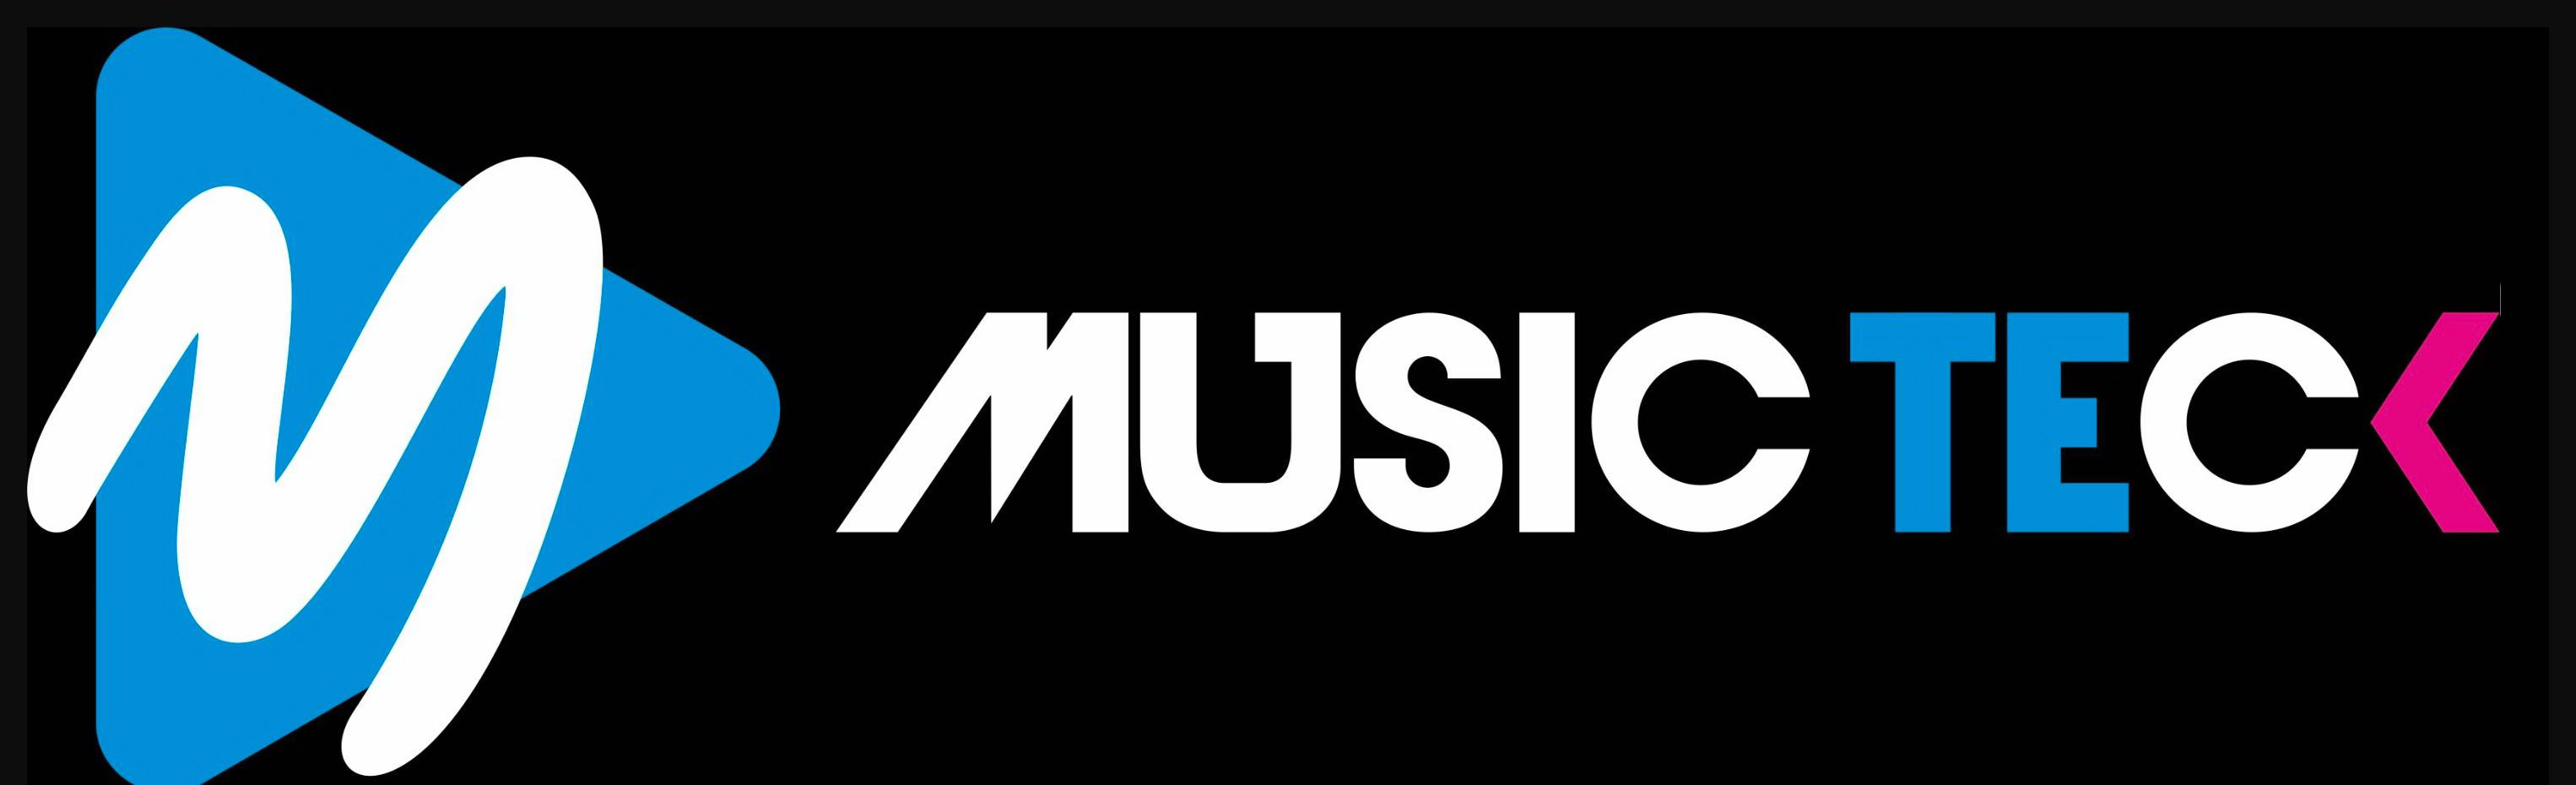 M MUSIC TECK - Musicteck Trademark Registration